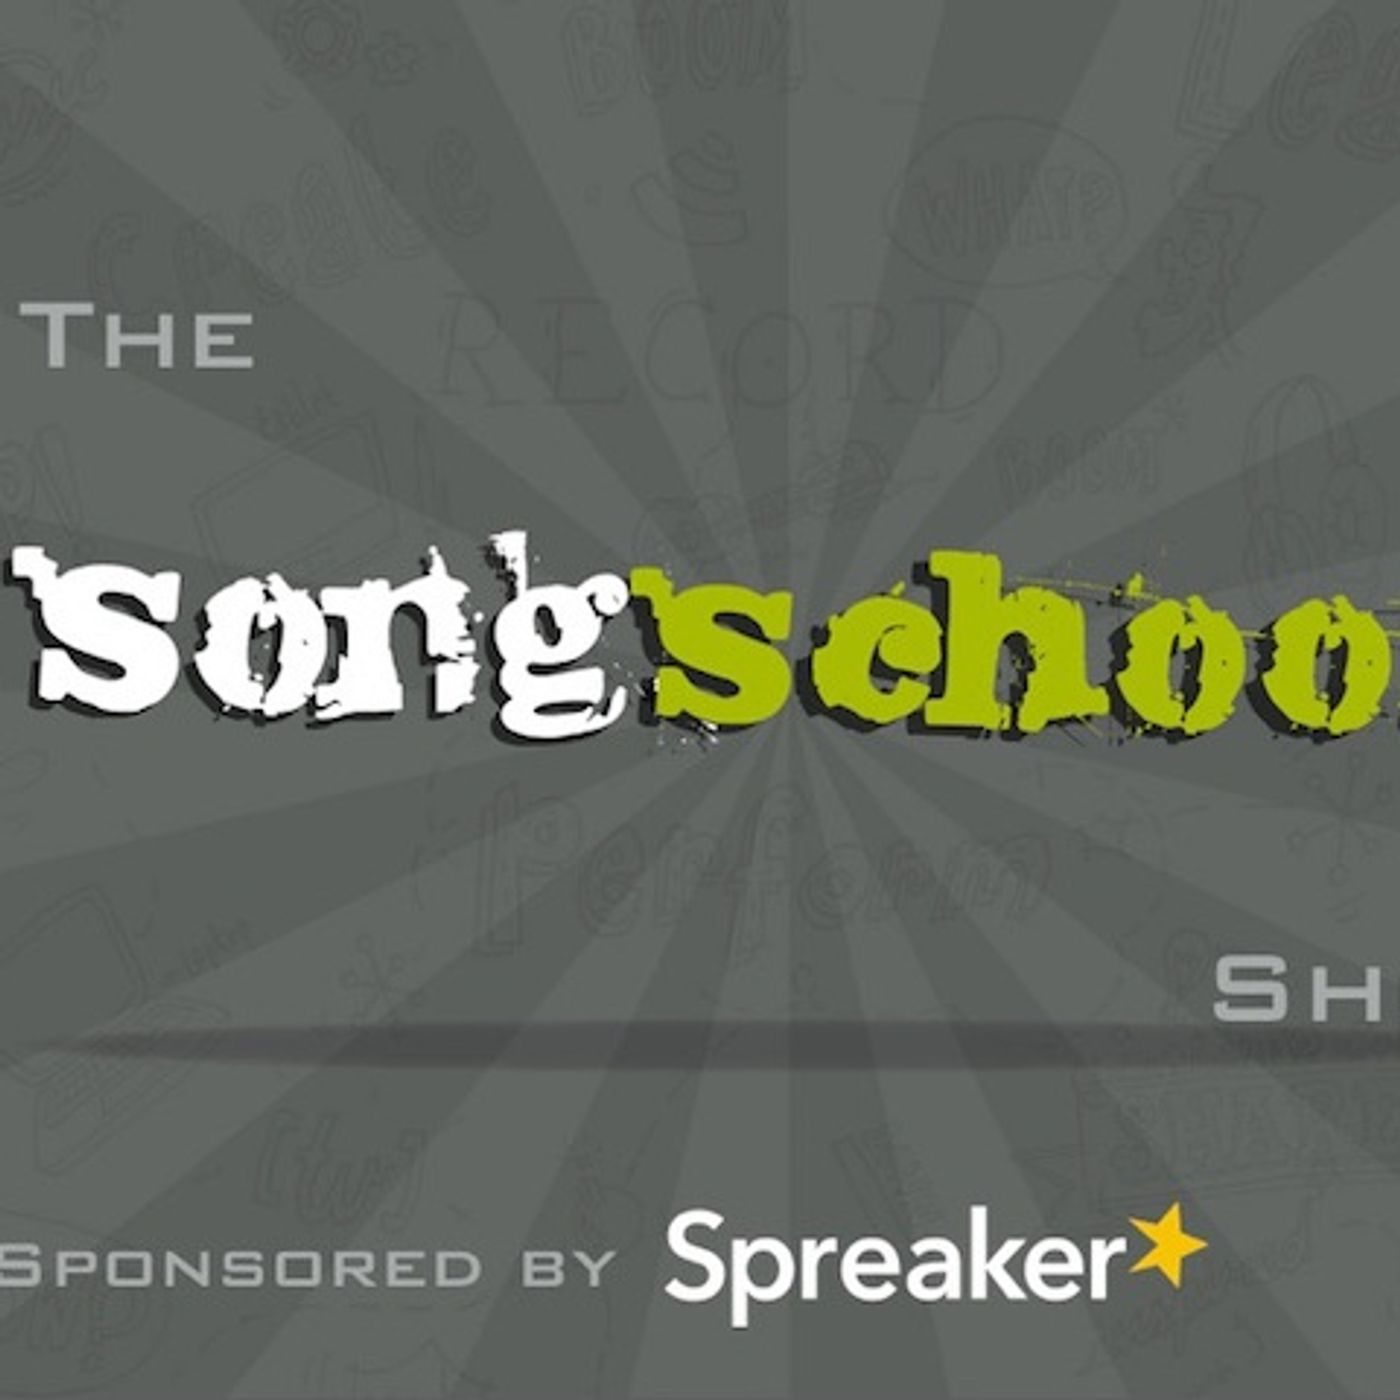 The Songschool Show @ King’s Hospital